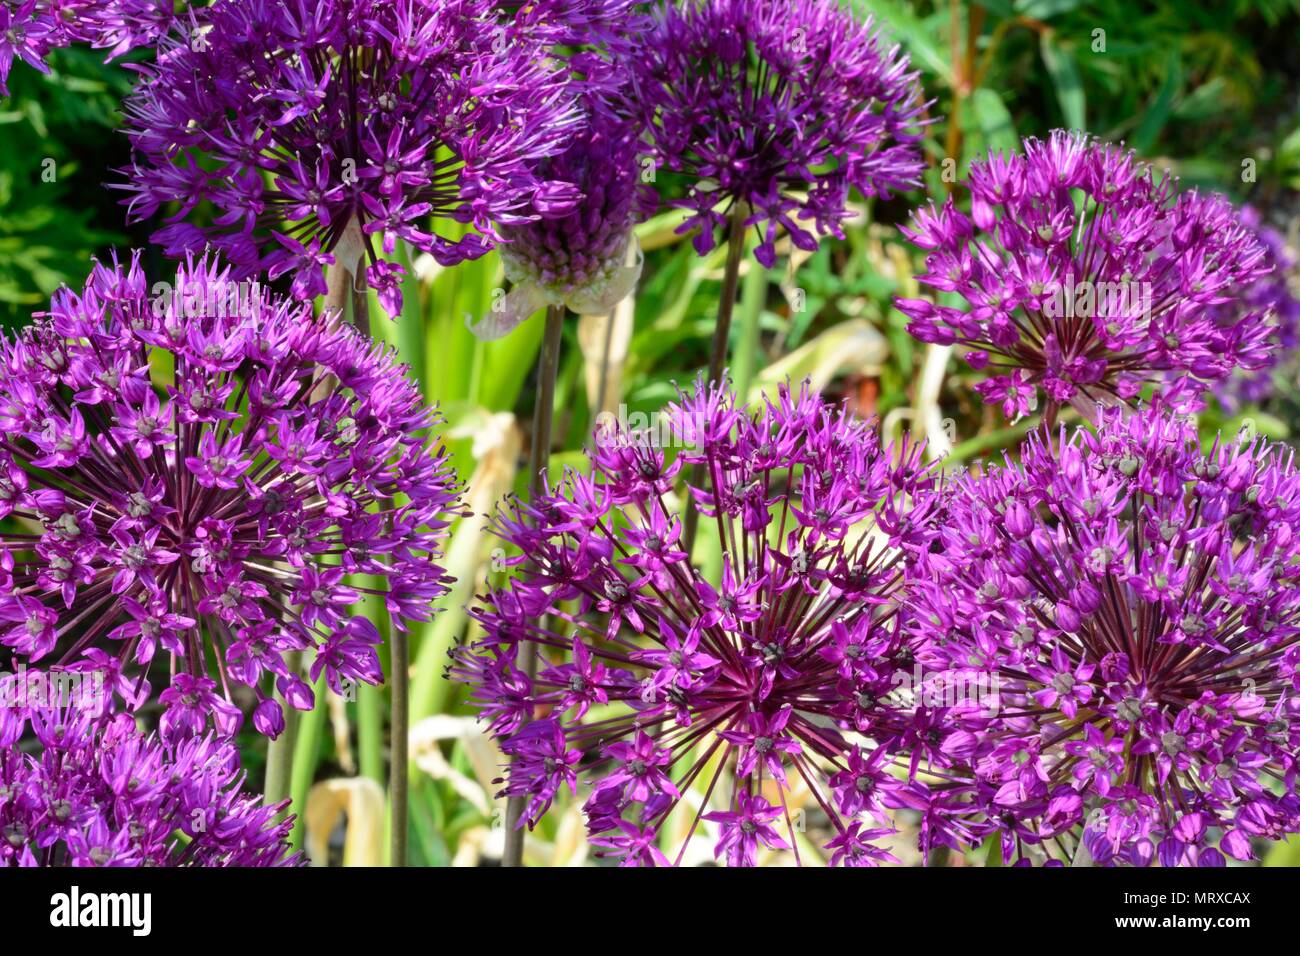 Alium hollandicum Purple sensation Persian onion or Dutch garlic large umbels of purple flowers Stock Photo